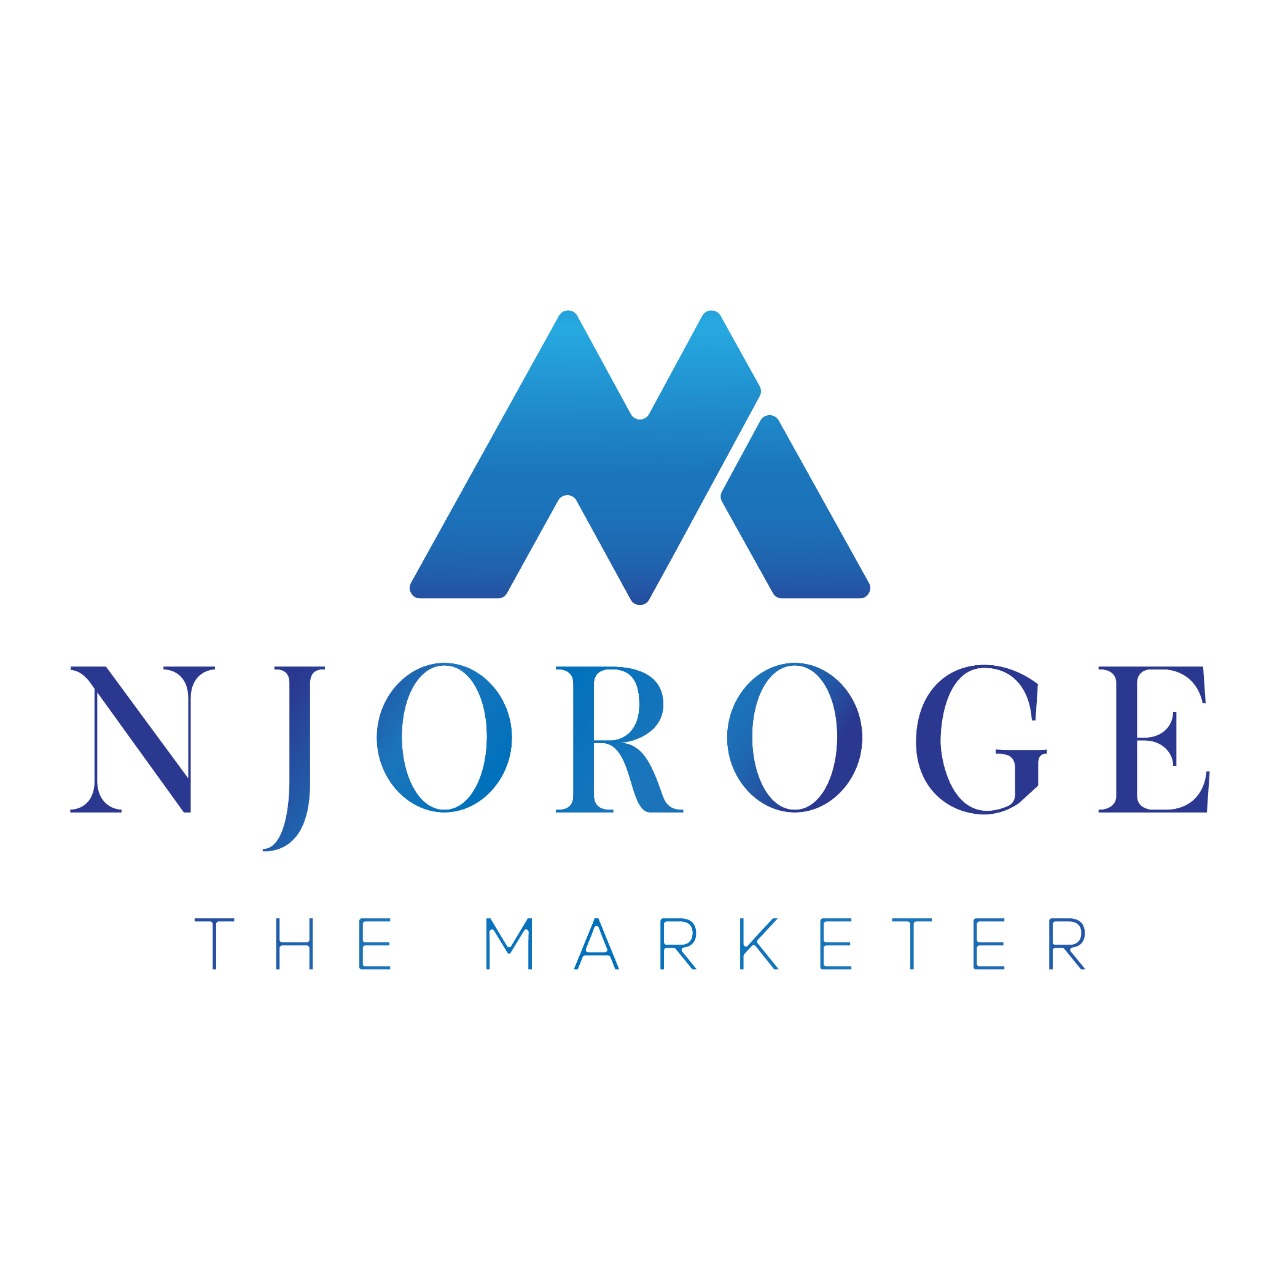 Njoroge The Marketer